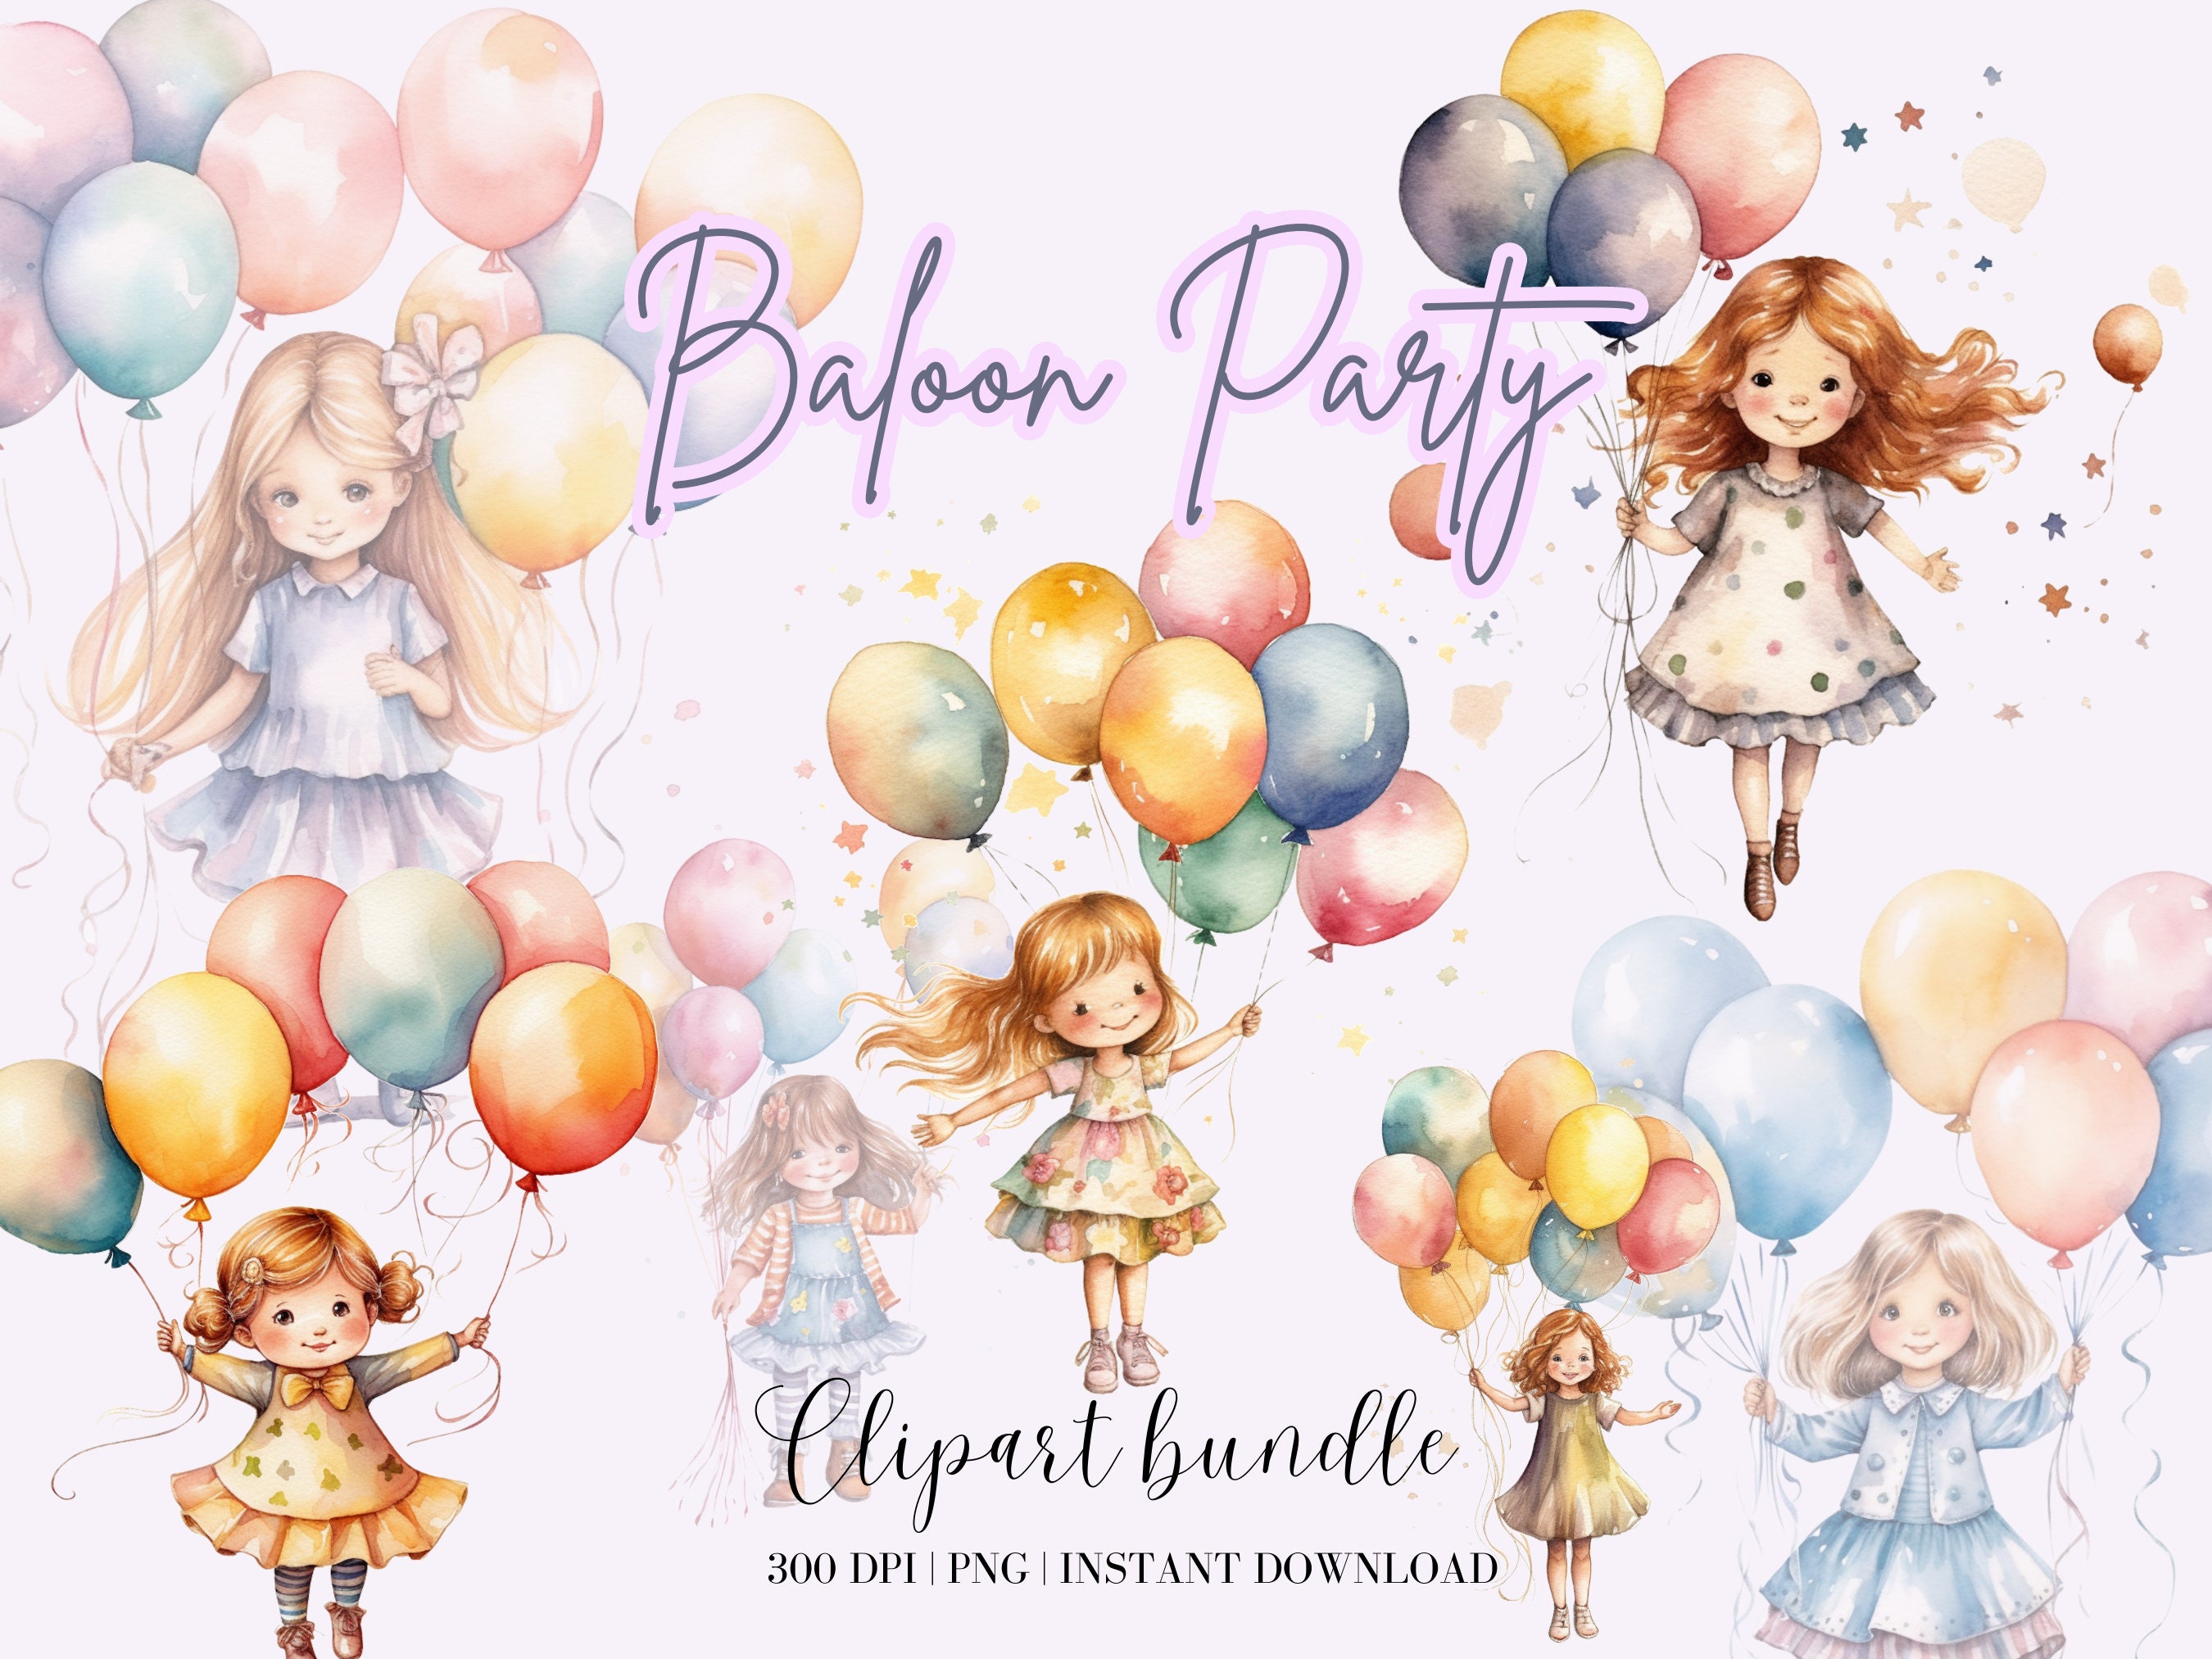 Birthday Girl Clipart Set, Glam Birthday Party, Pastel, Romantic